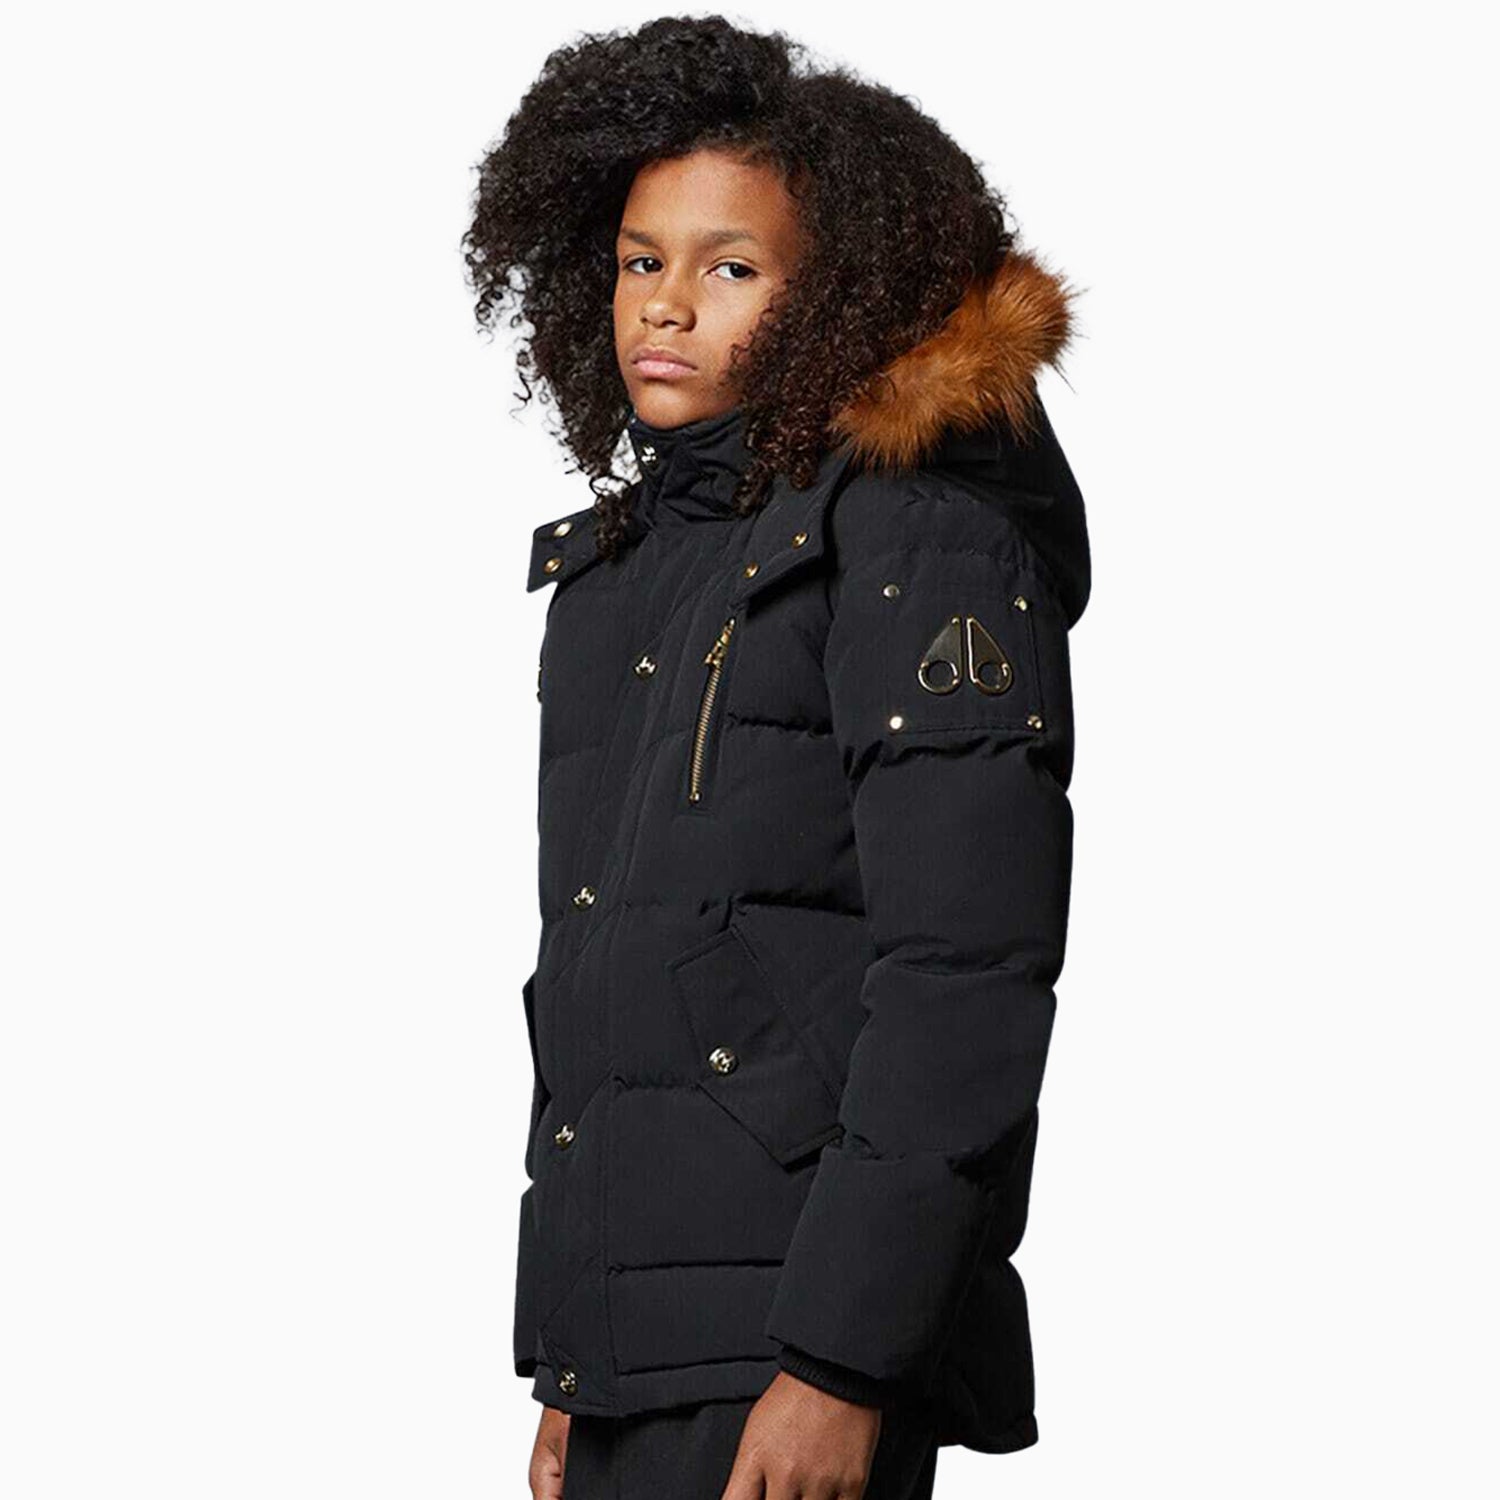 Moose Knuckles Kid's Unisex 3Q Jacket - Color: Black Gold - Kids Premium Clothing -